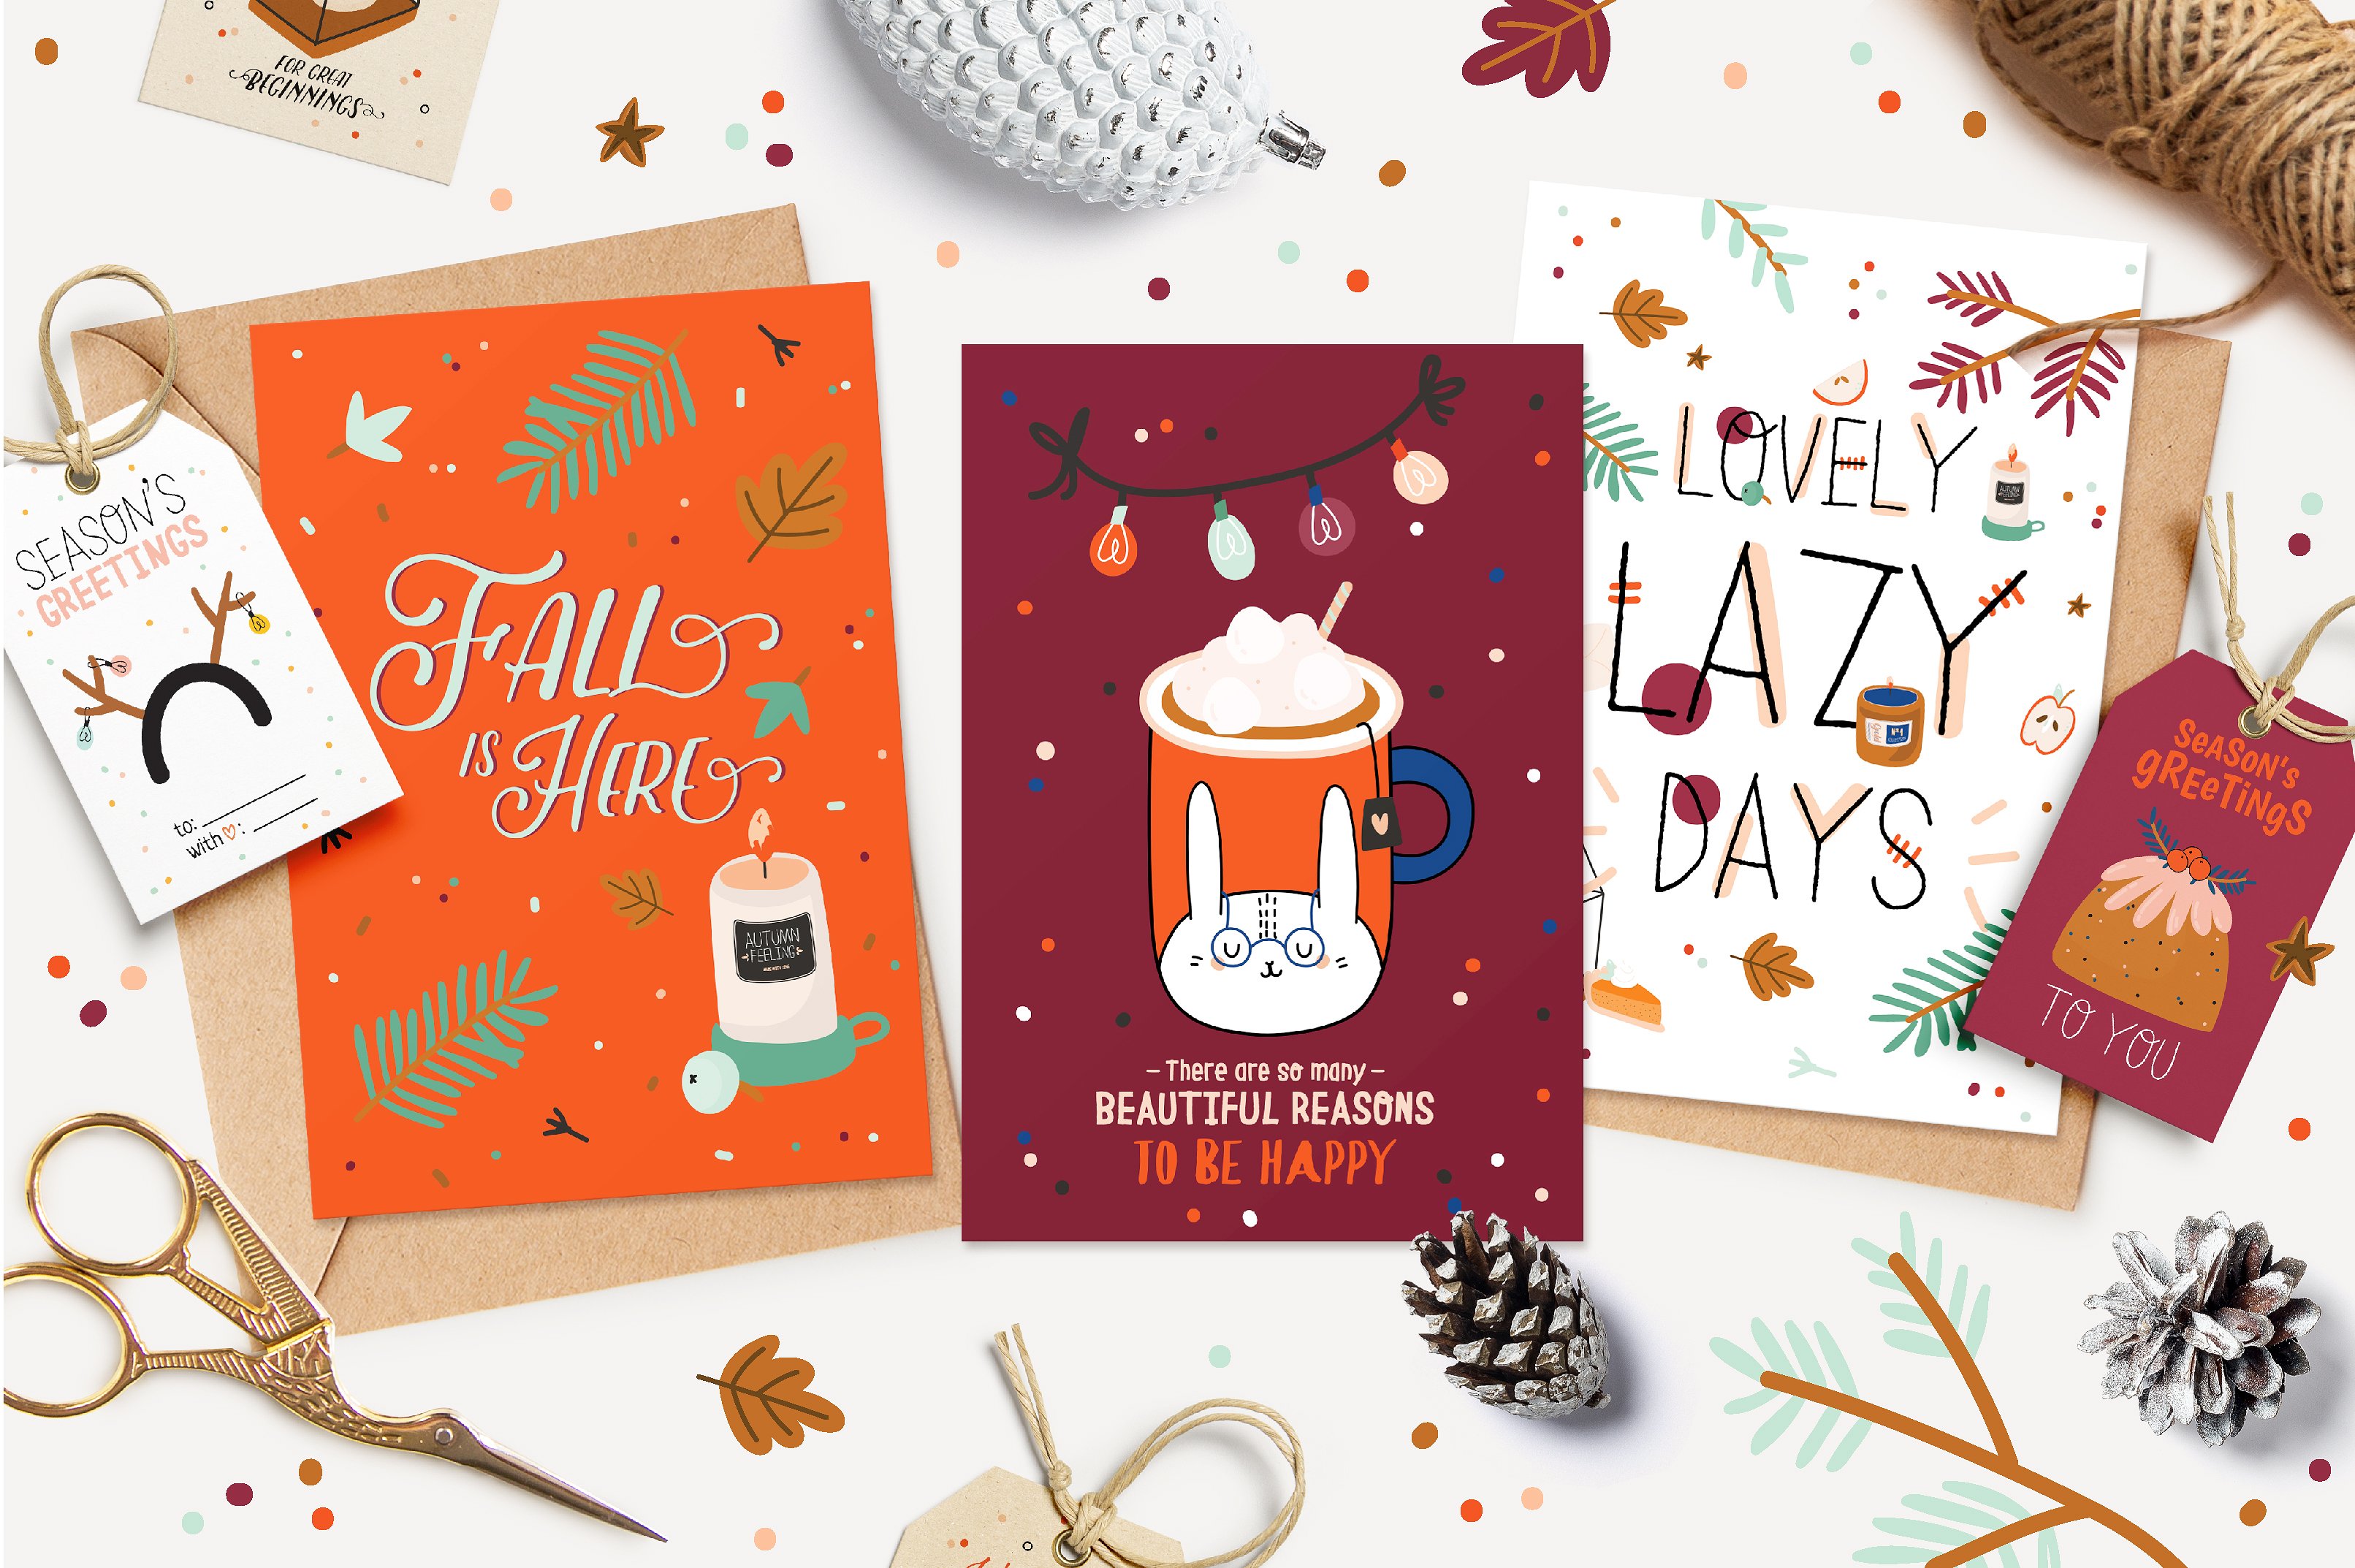 可爱的圣诞贺卡和礼品标签插图 Cute Christmas Cards & Gift Labels插图3